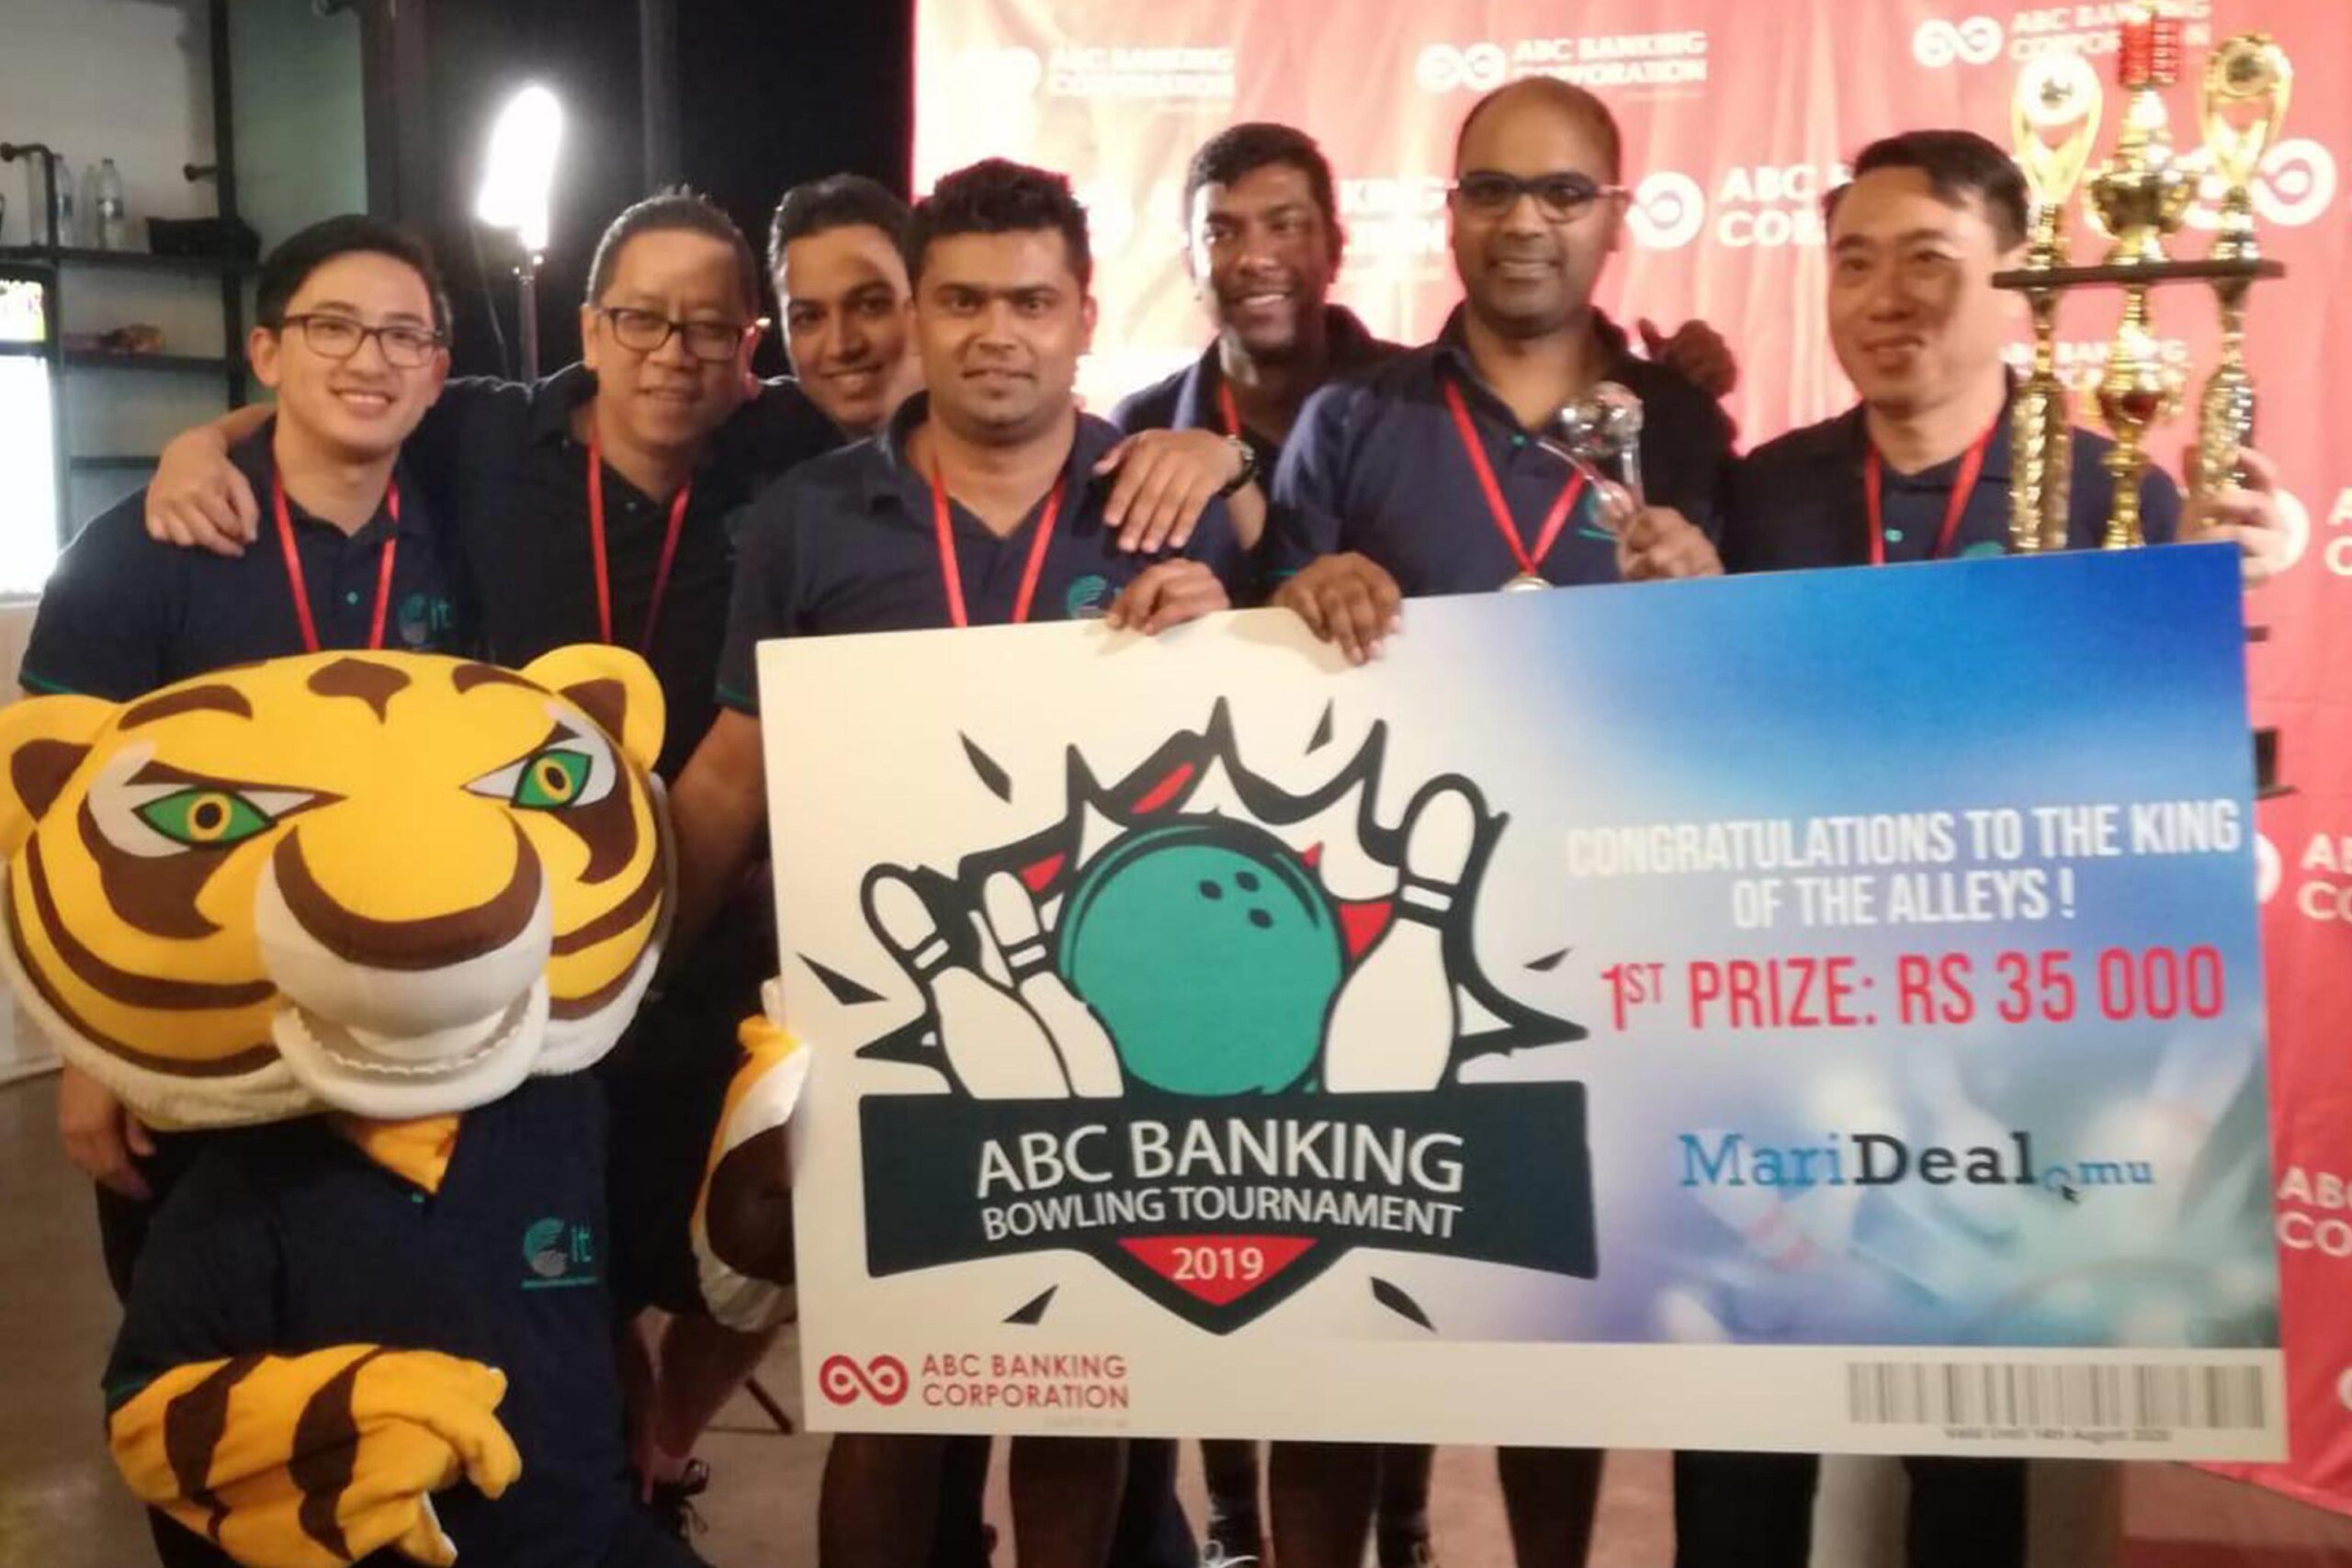 ABC Banking - Bowling Tournament